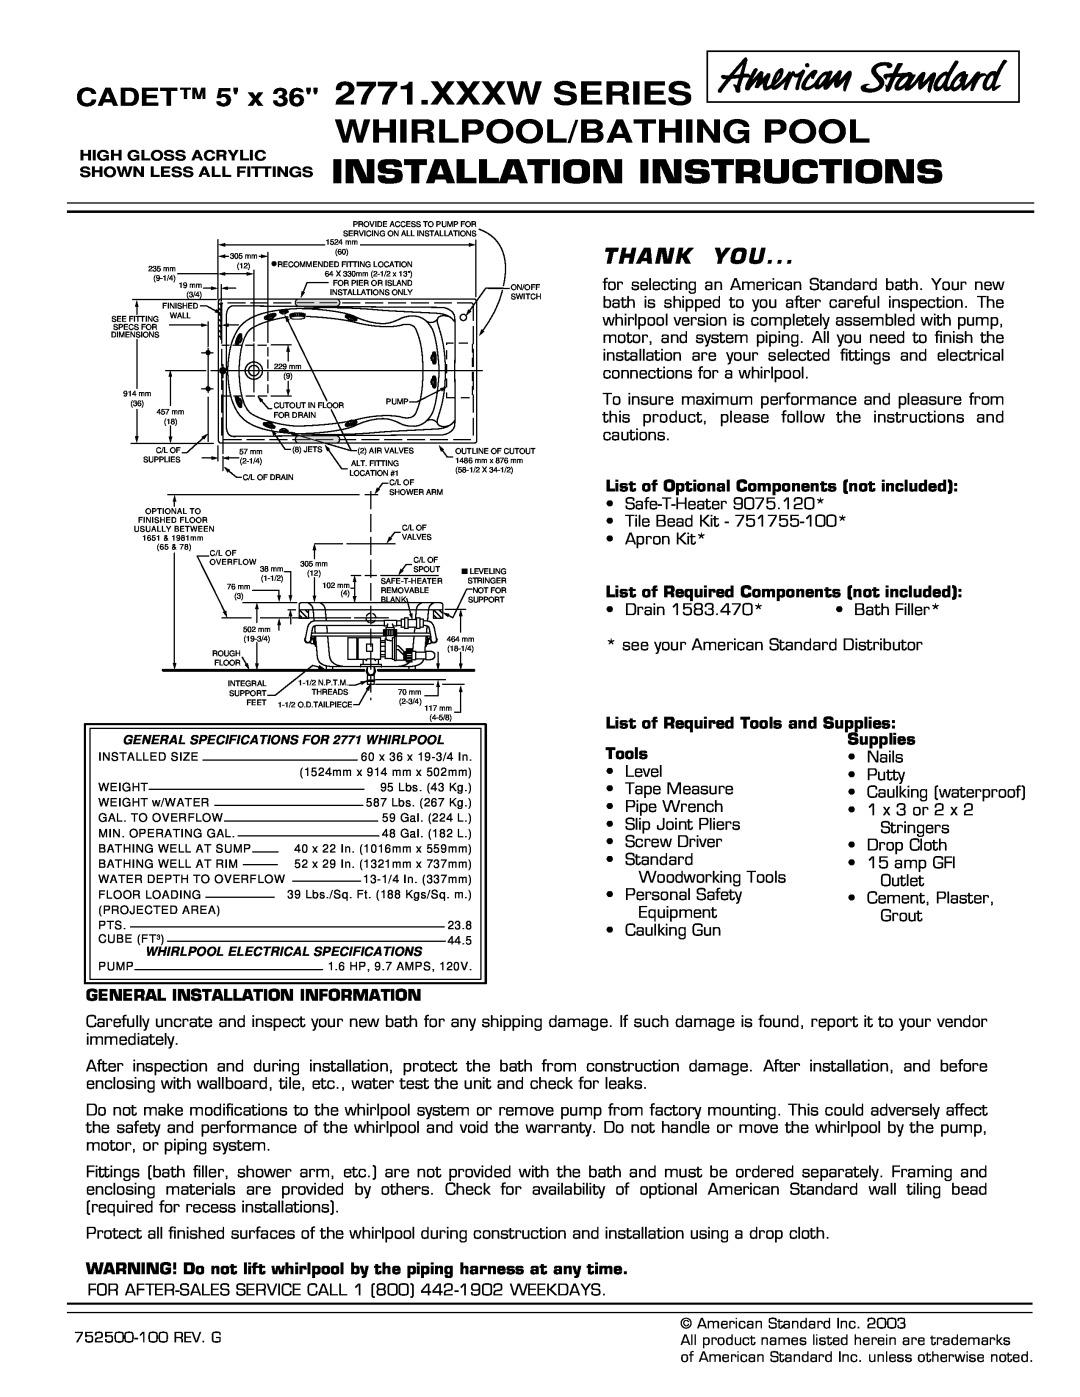 American Standard 2771.XXXW Series installation instructions Xxxw Series Whirlpool/Bathing Pool, Installation Instructions 